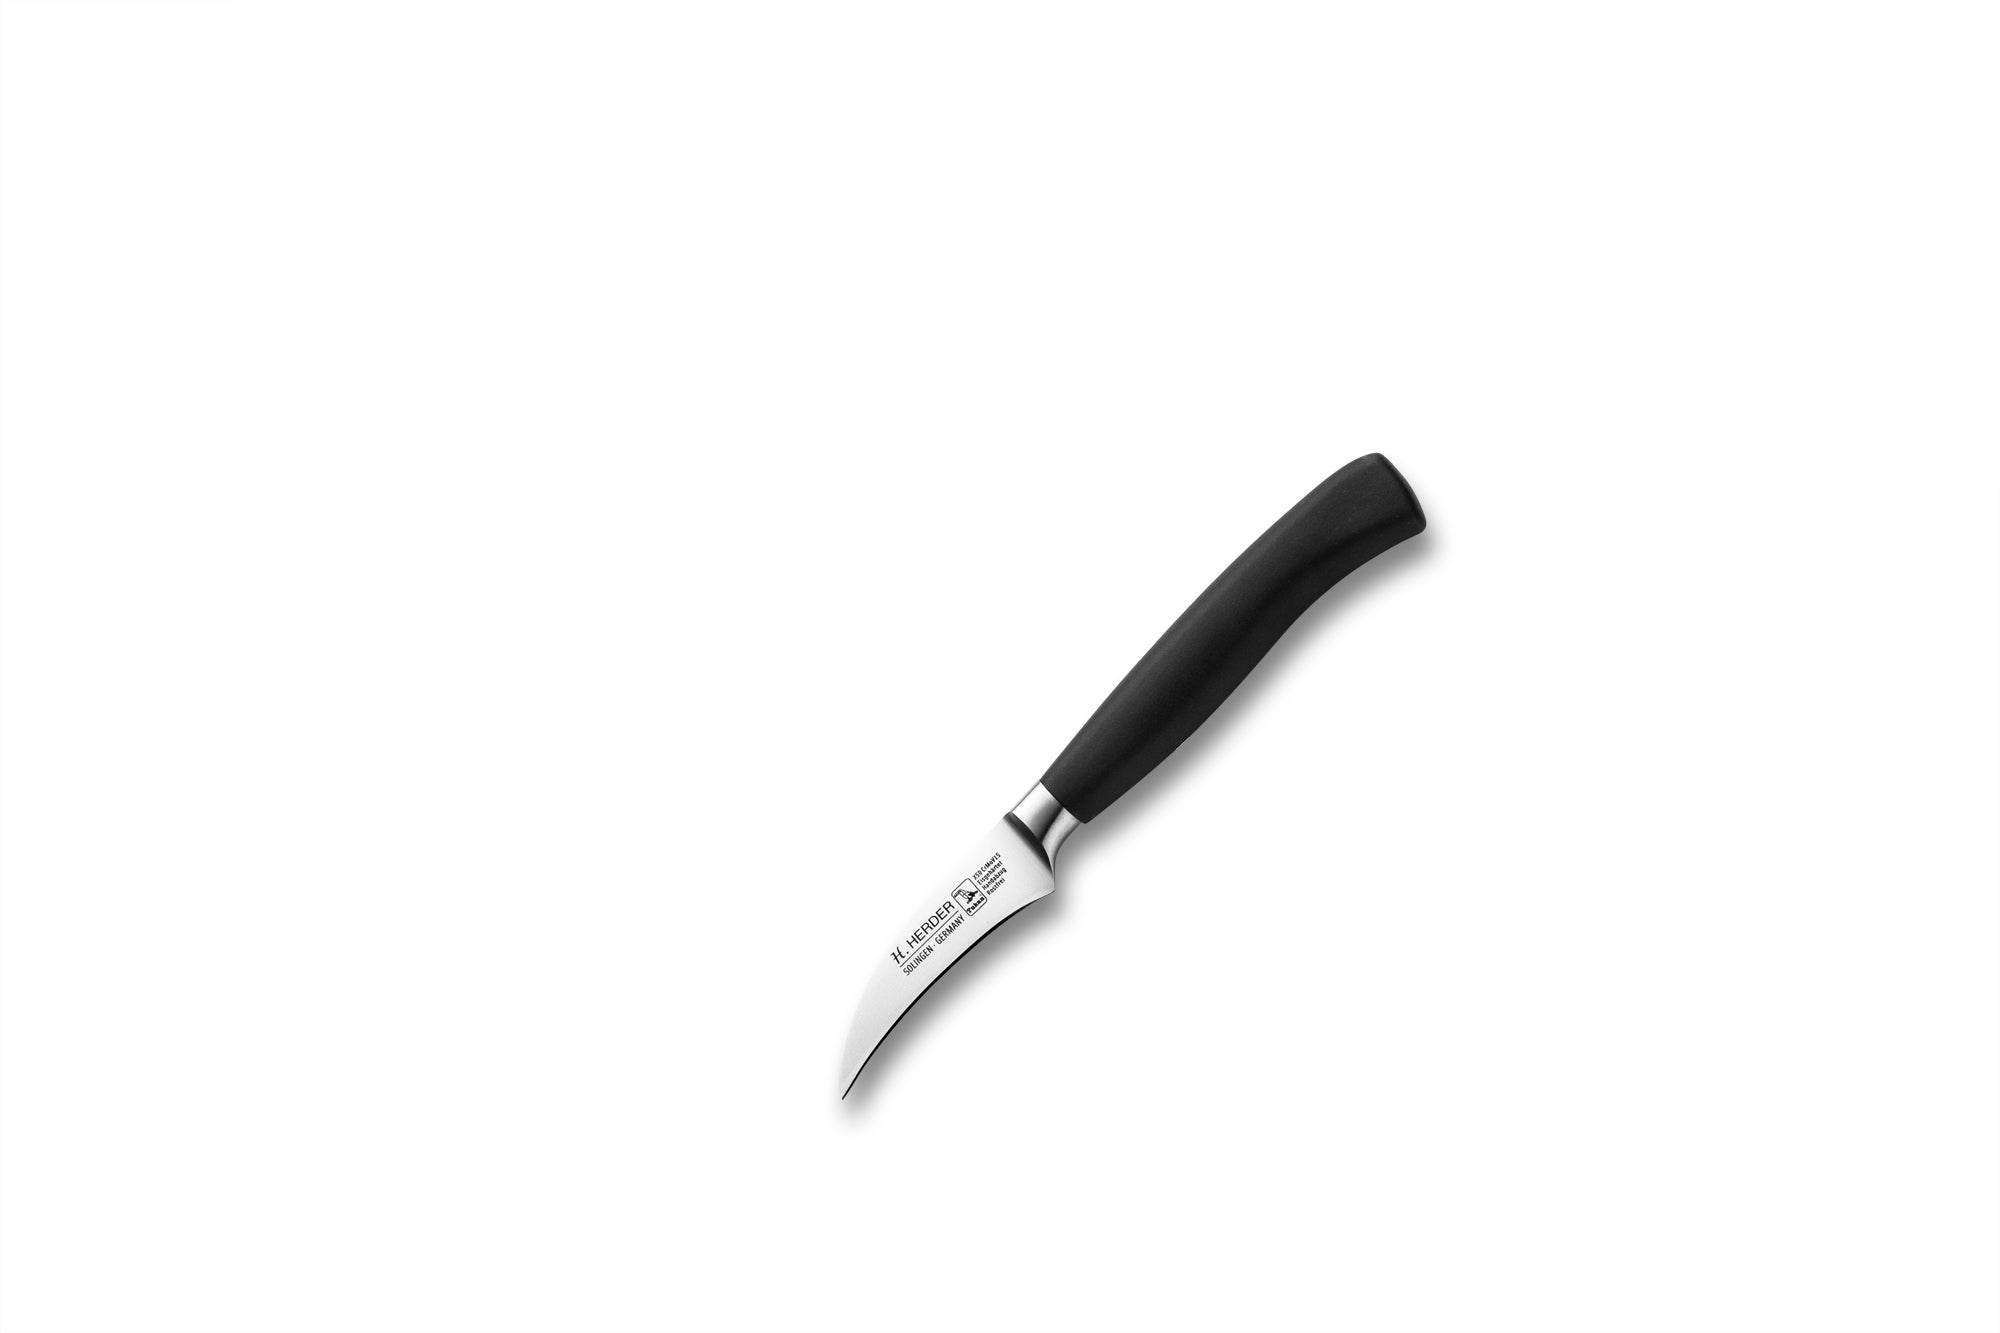 Paring knife Eterno Gastro, blade length 7cm